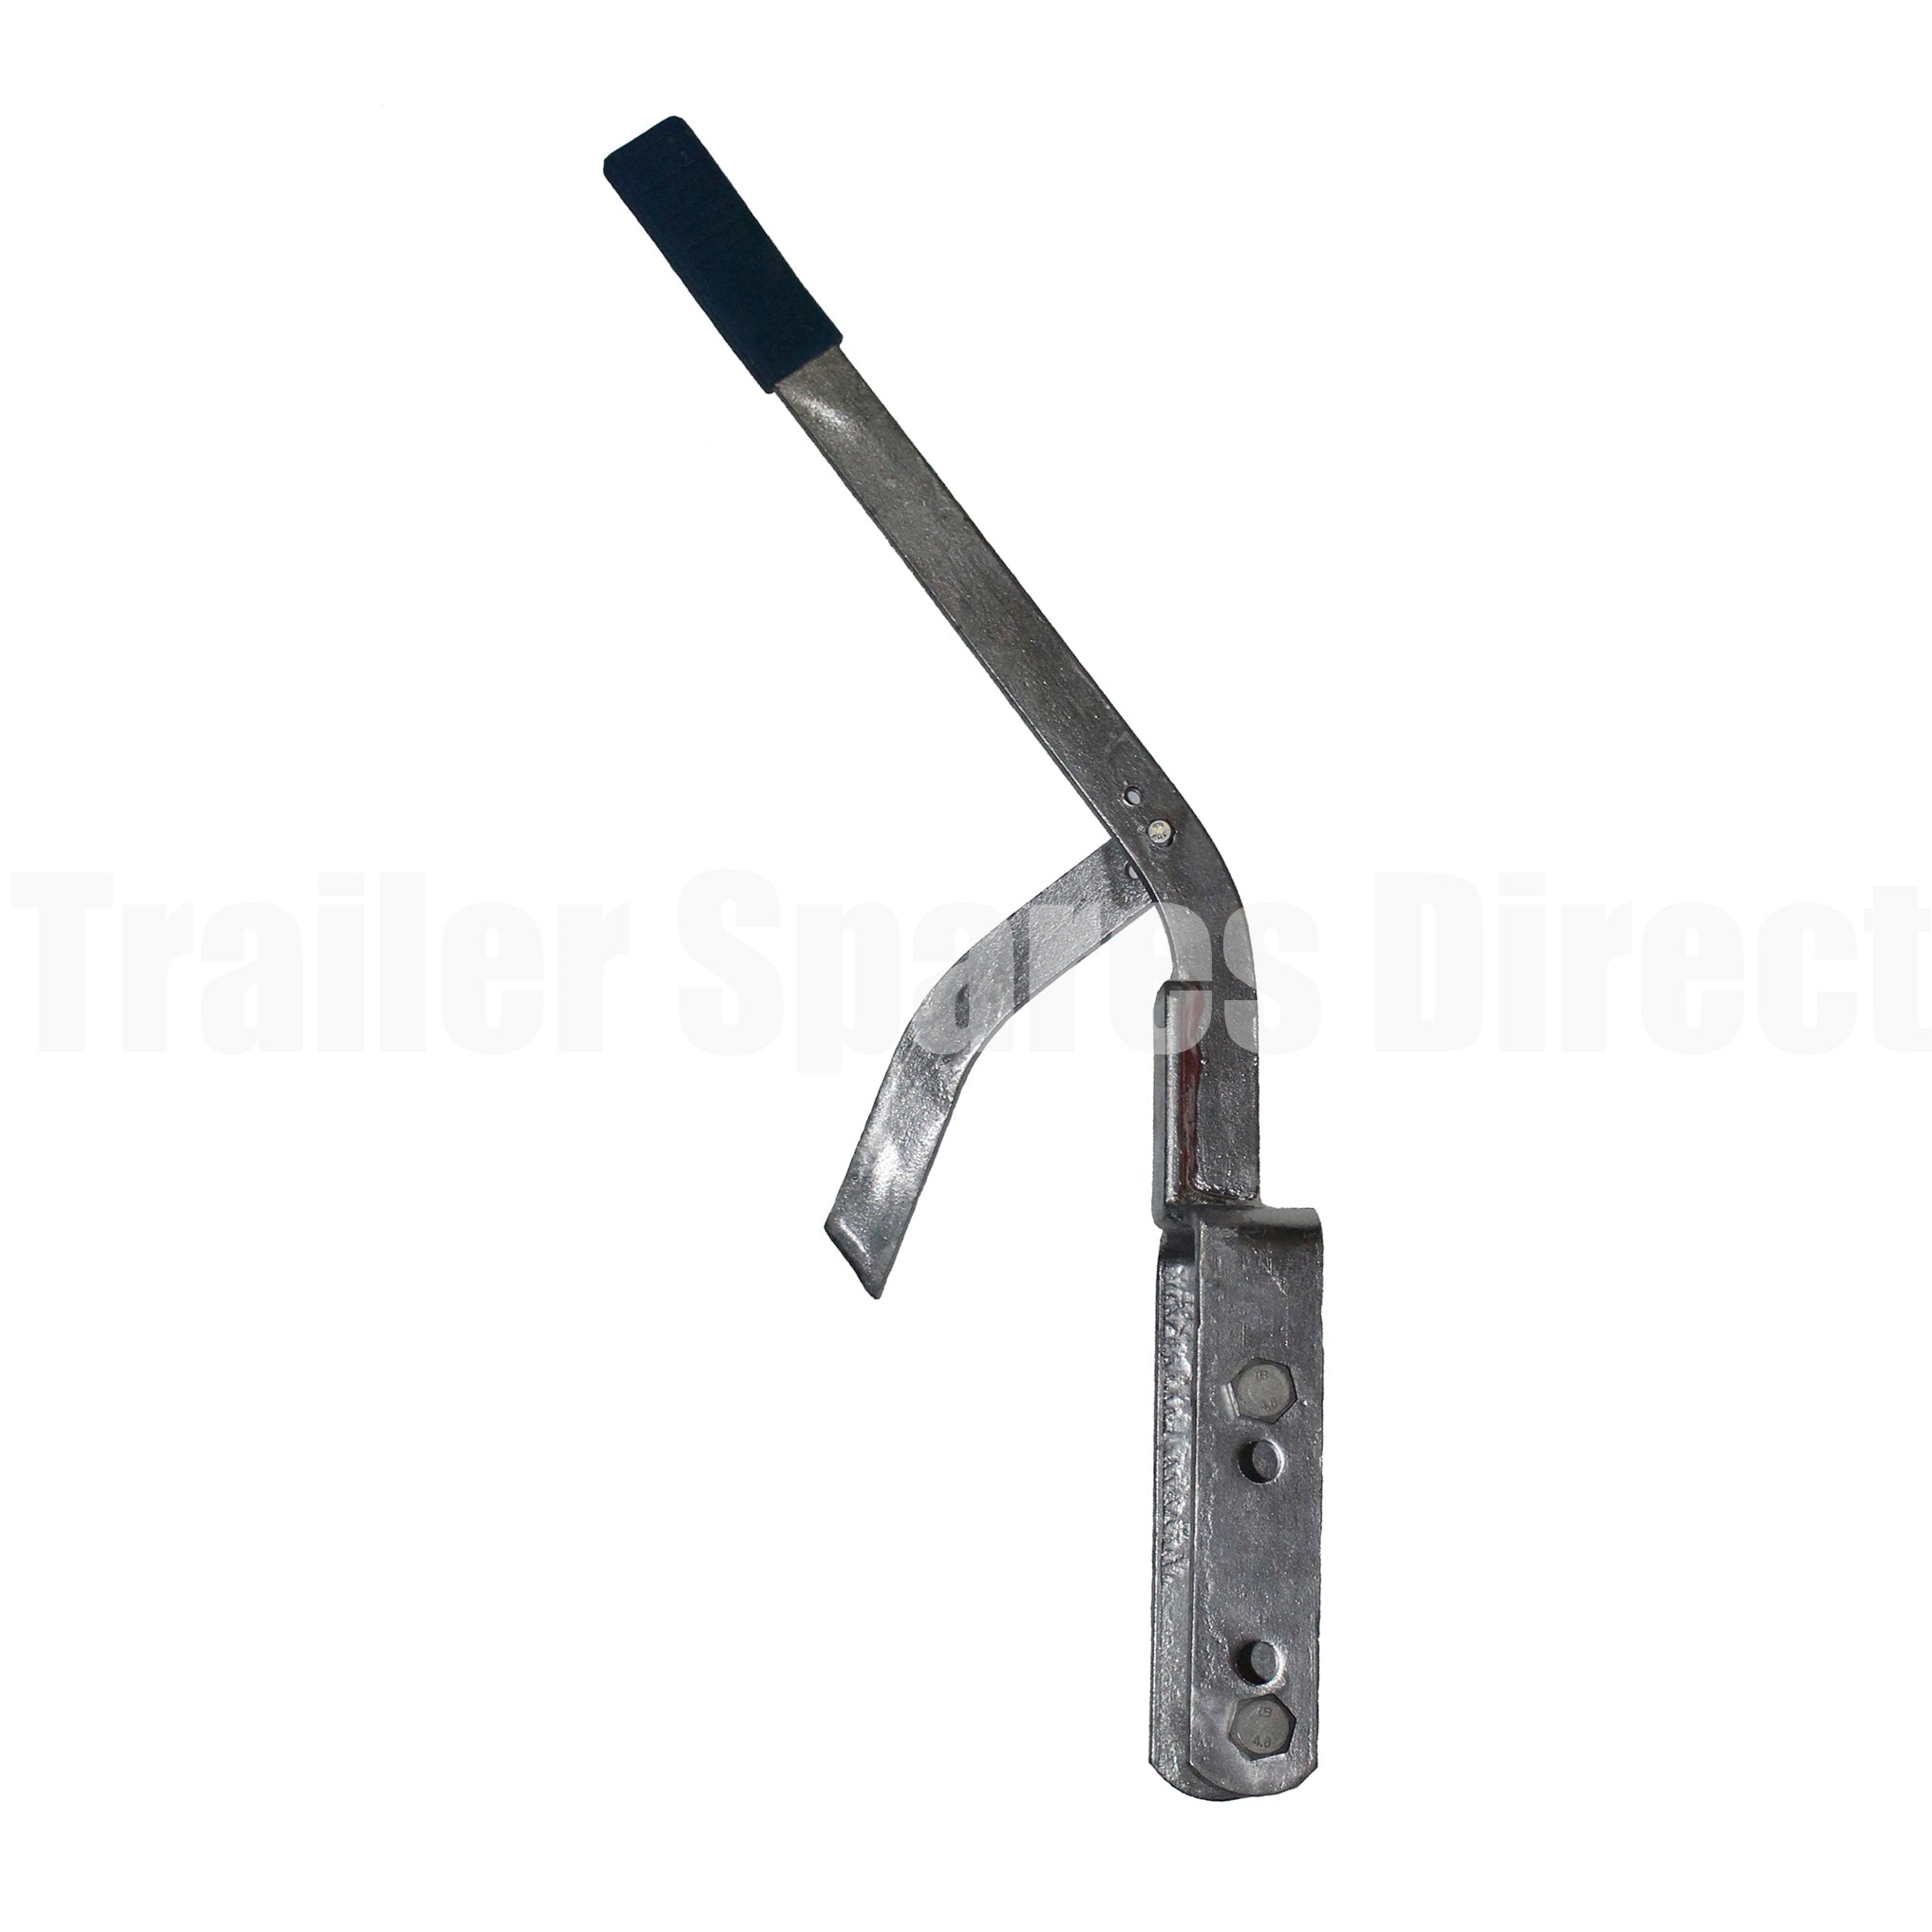 Handbrake lever for 50mm wide single drawbar applications